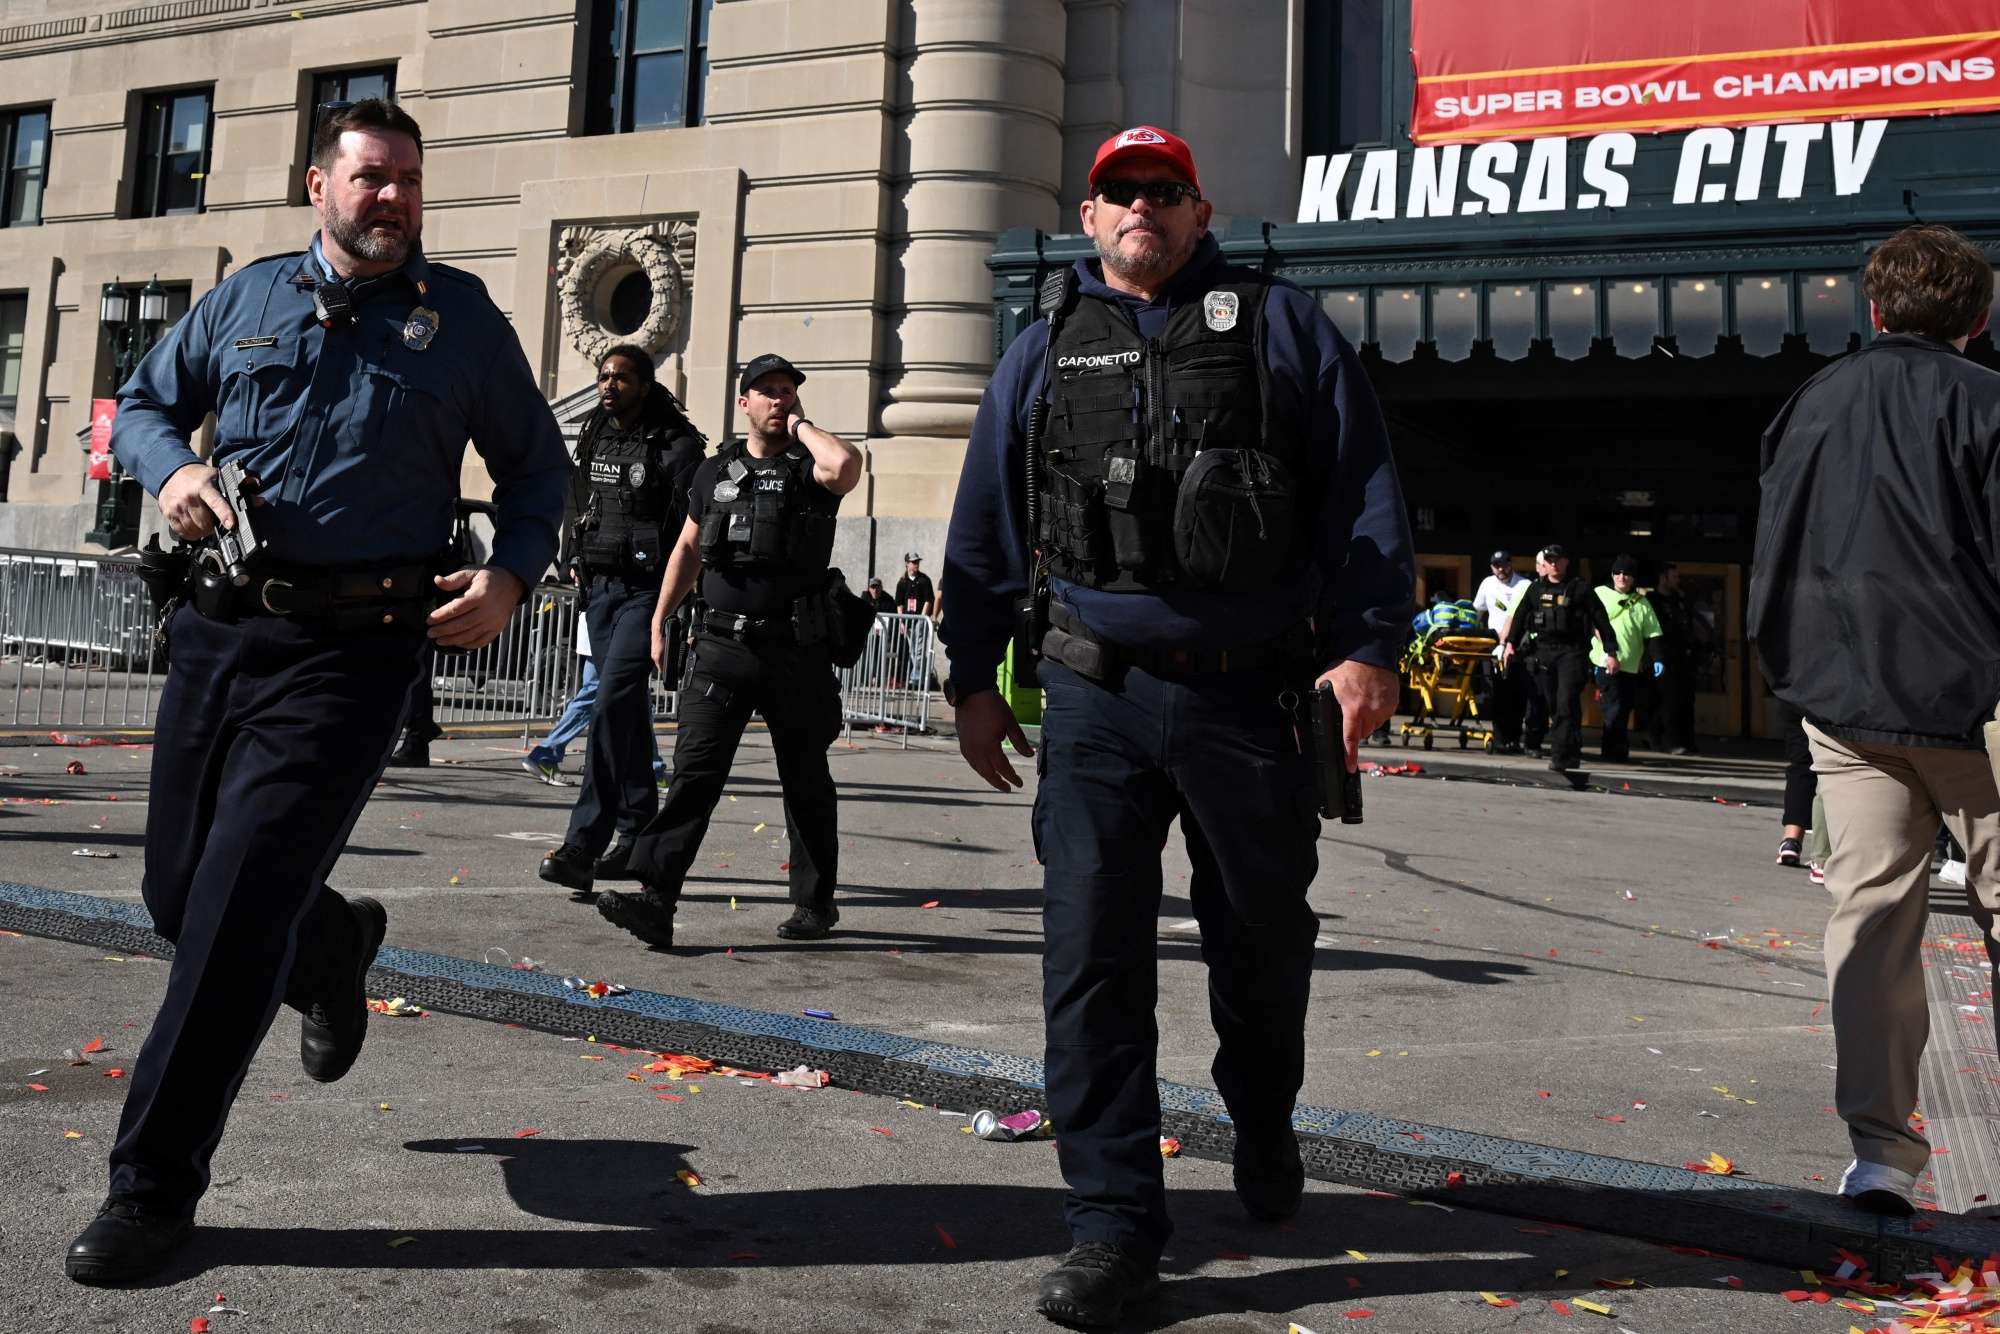 Kansas City shooting: A dispute led to gunfire after Super Bowl parade, police say